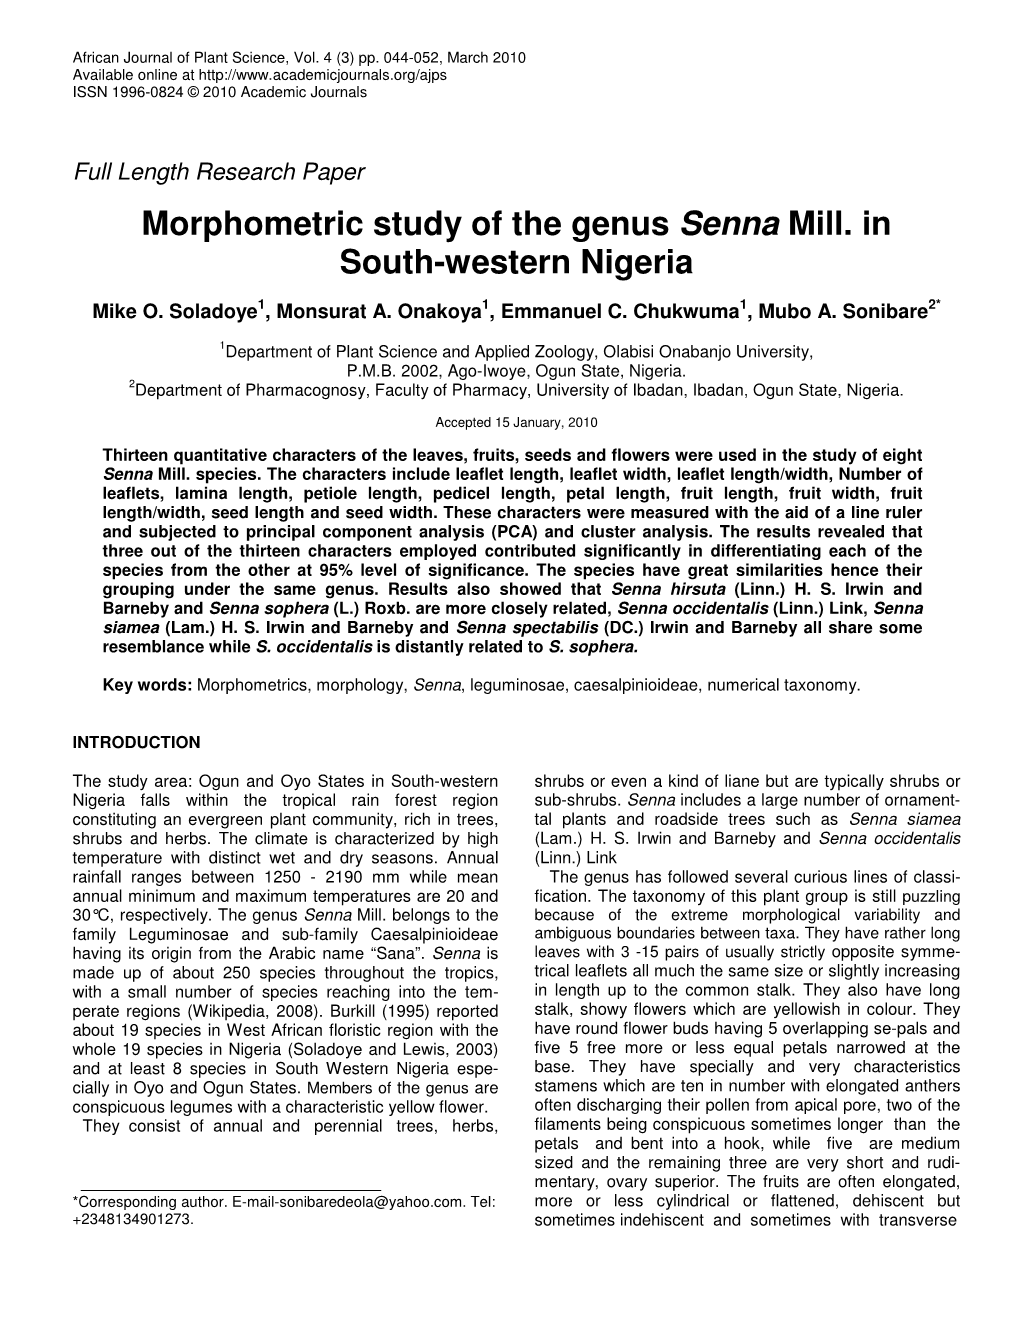 Morphometric Study of the Genus Senna Mill. in South-Western Nigeria